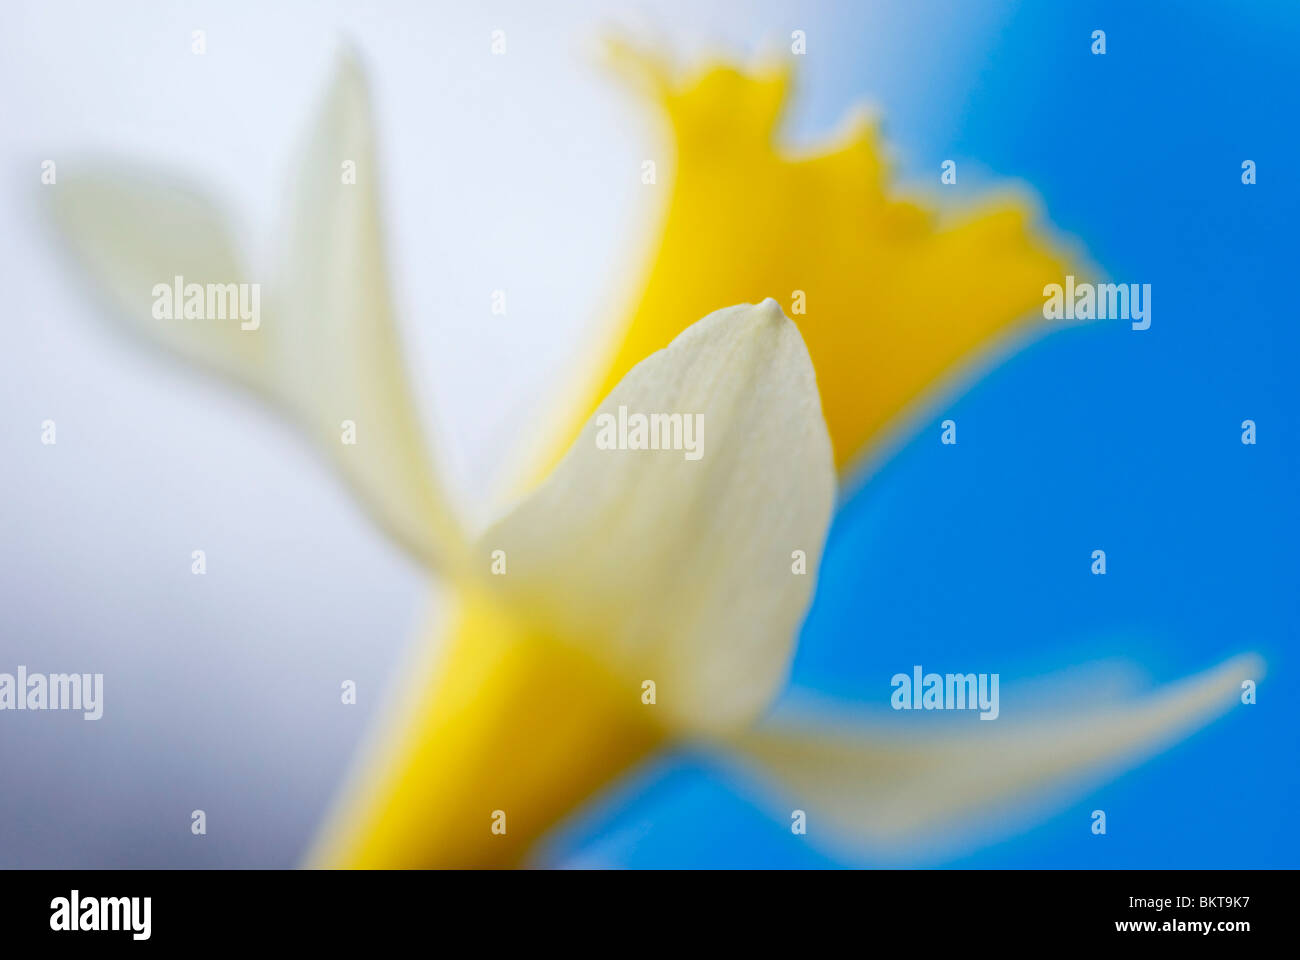 Macro nomeop van een narcis; Macro Immagine di un daffodil Foto Stock